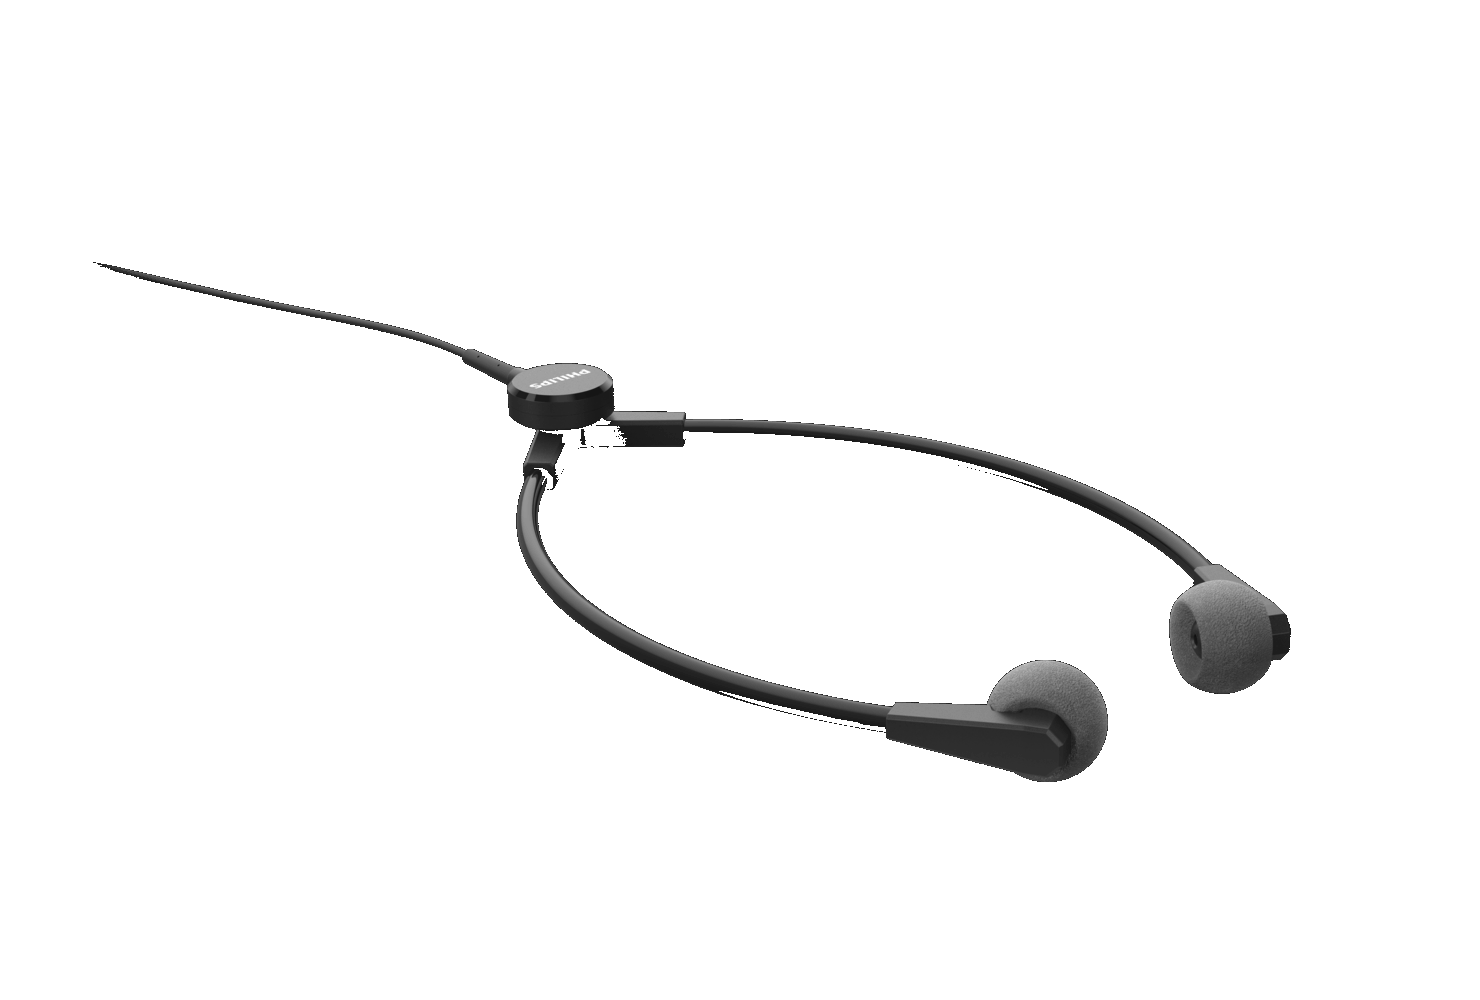 Philips ACC0232/00 Stethoscope style Transcription Headphones - 3.5mm /  Transcription / Transcription Headsets 